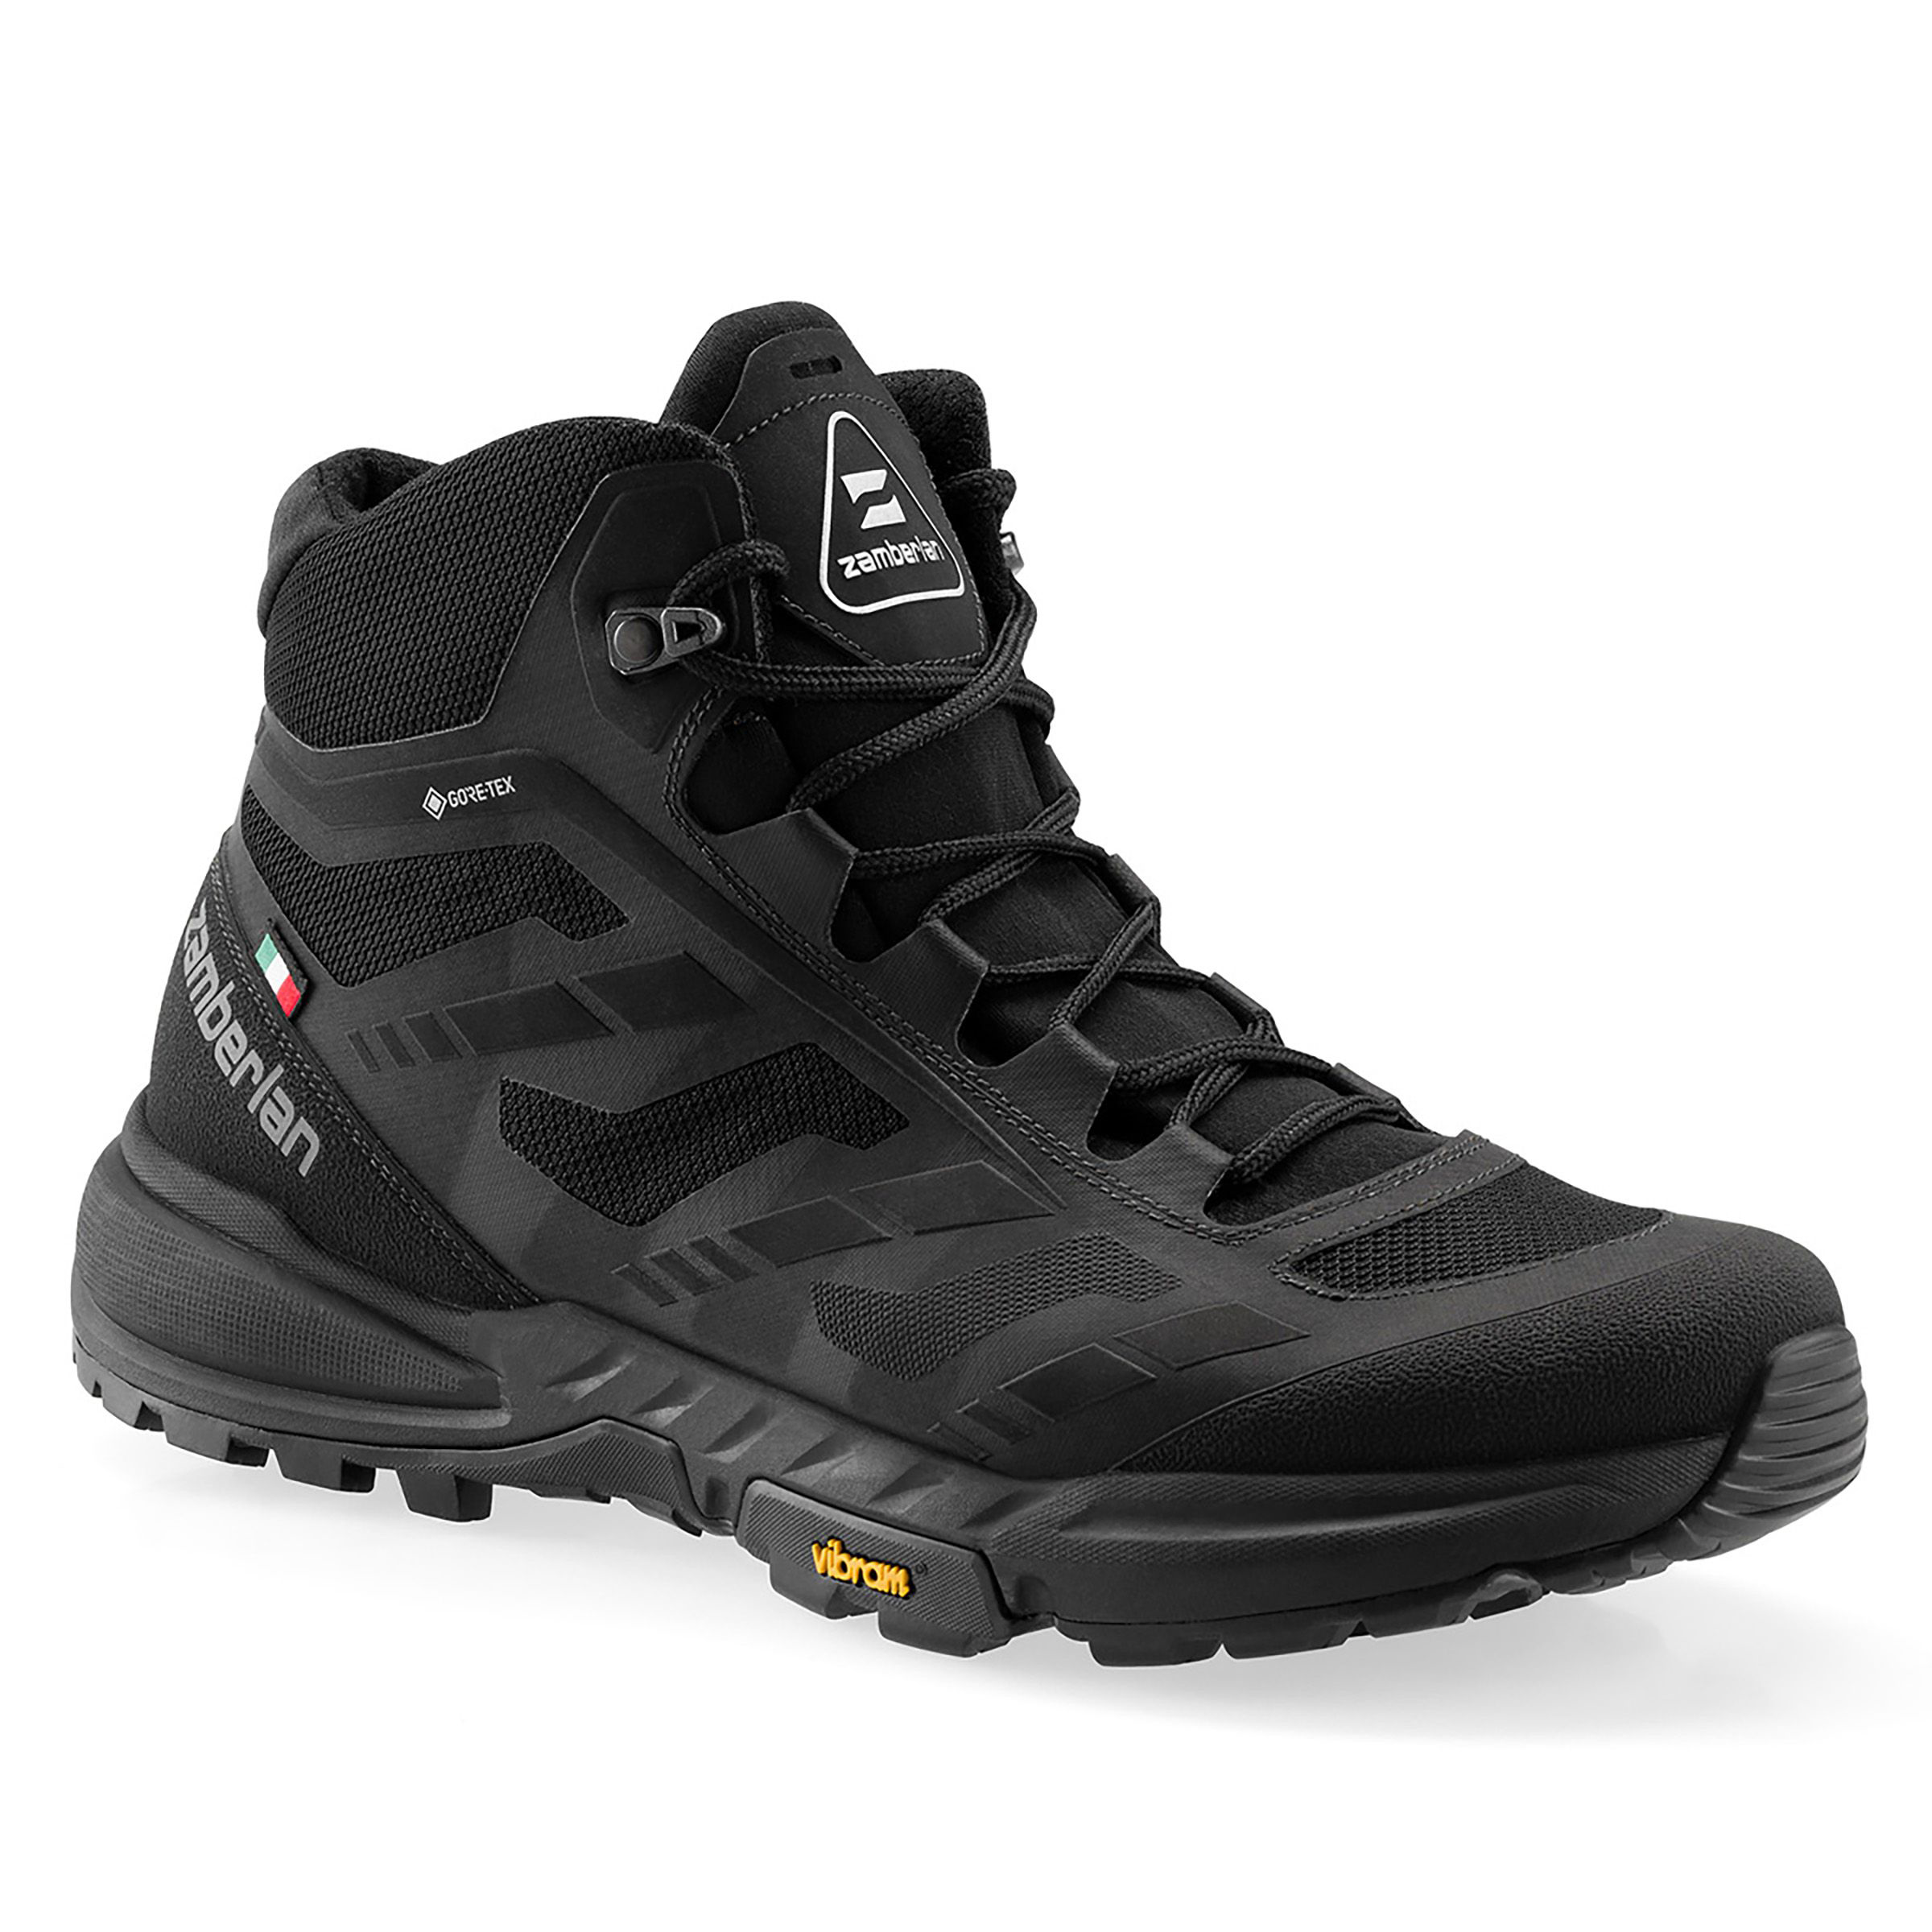 Zamberlan 219 Anabasis GTX Waterproof Mid Hiking Boots for Men - Black - 13M